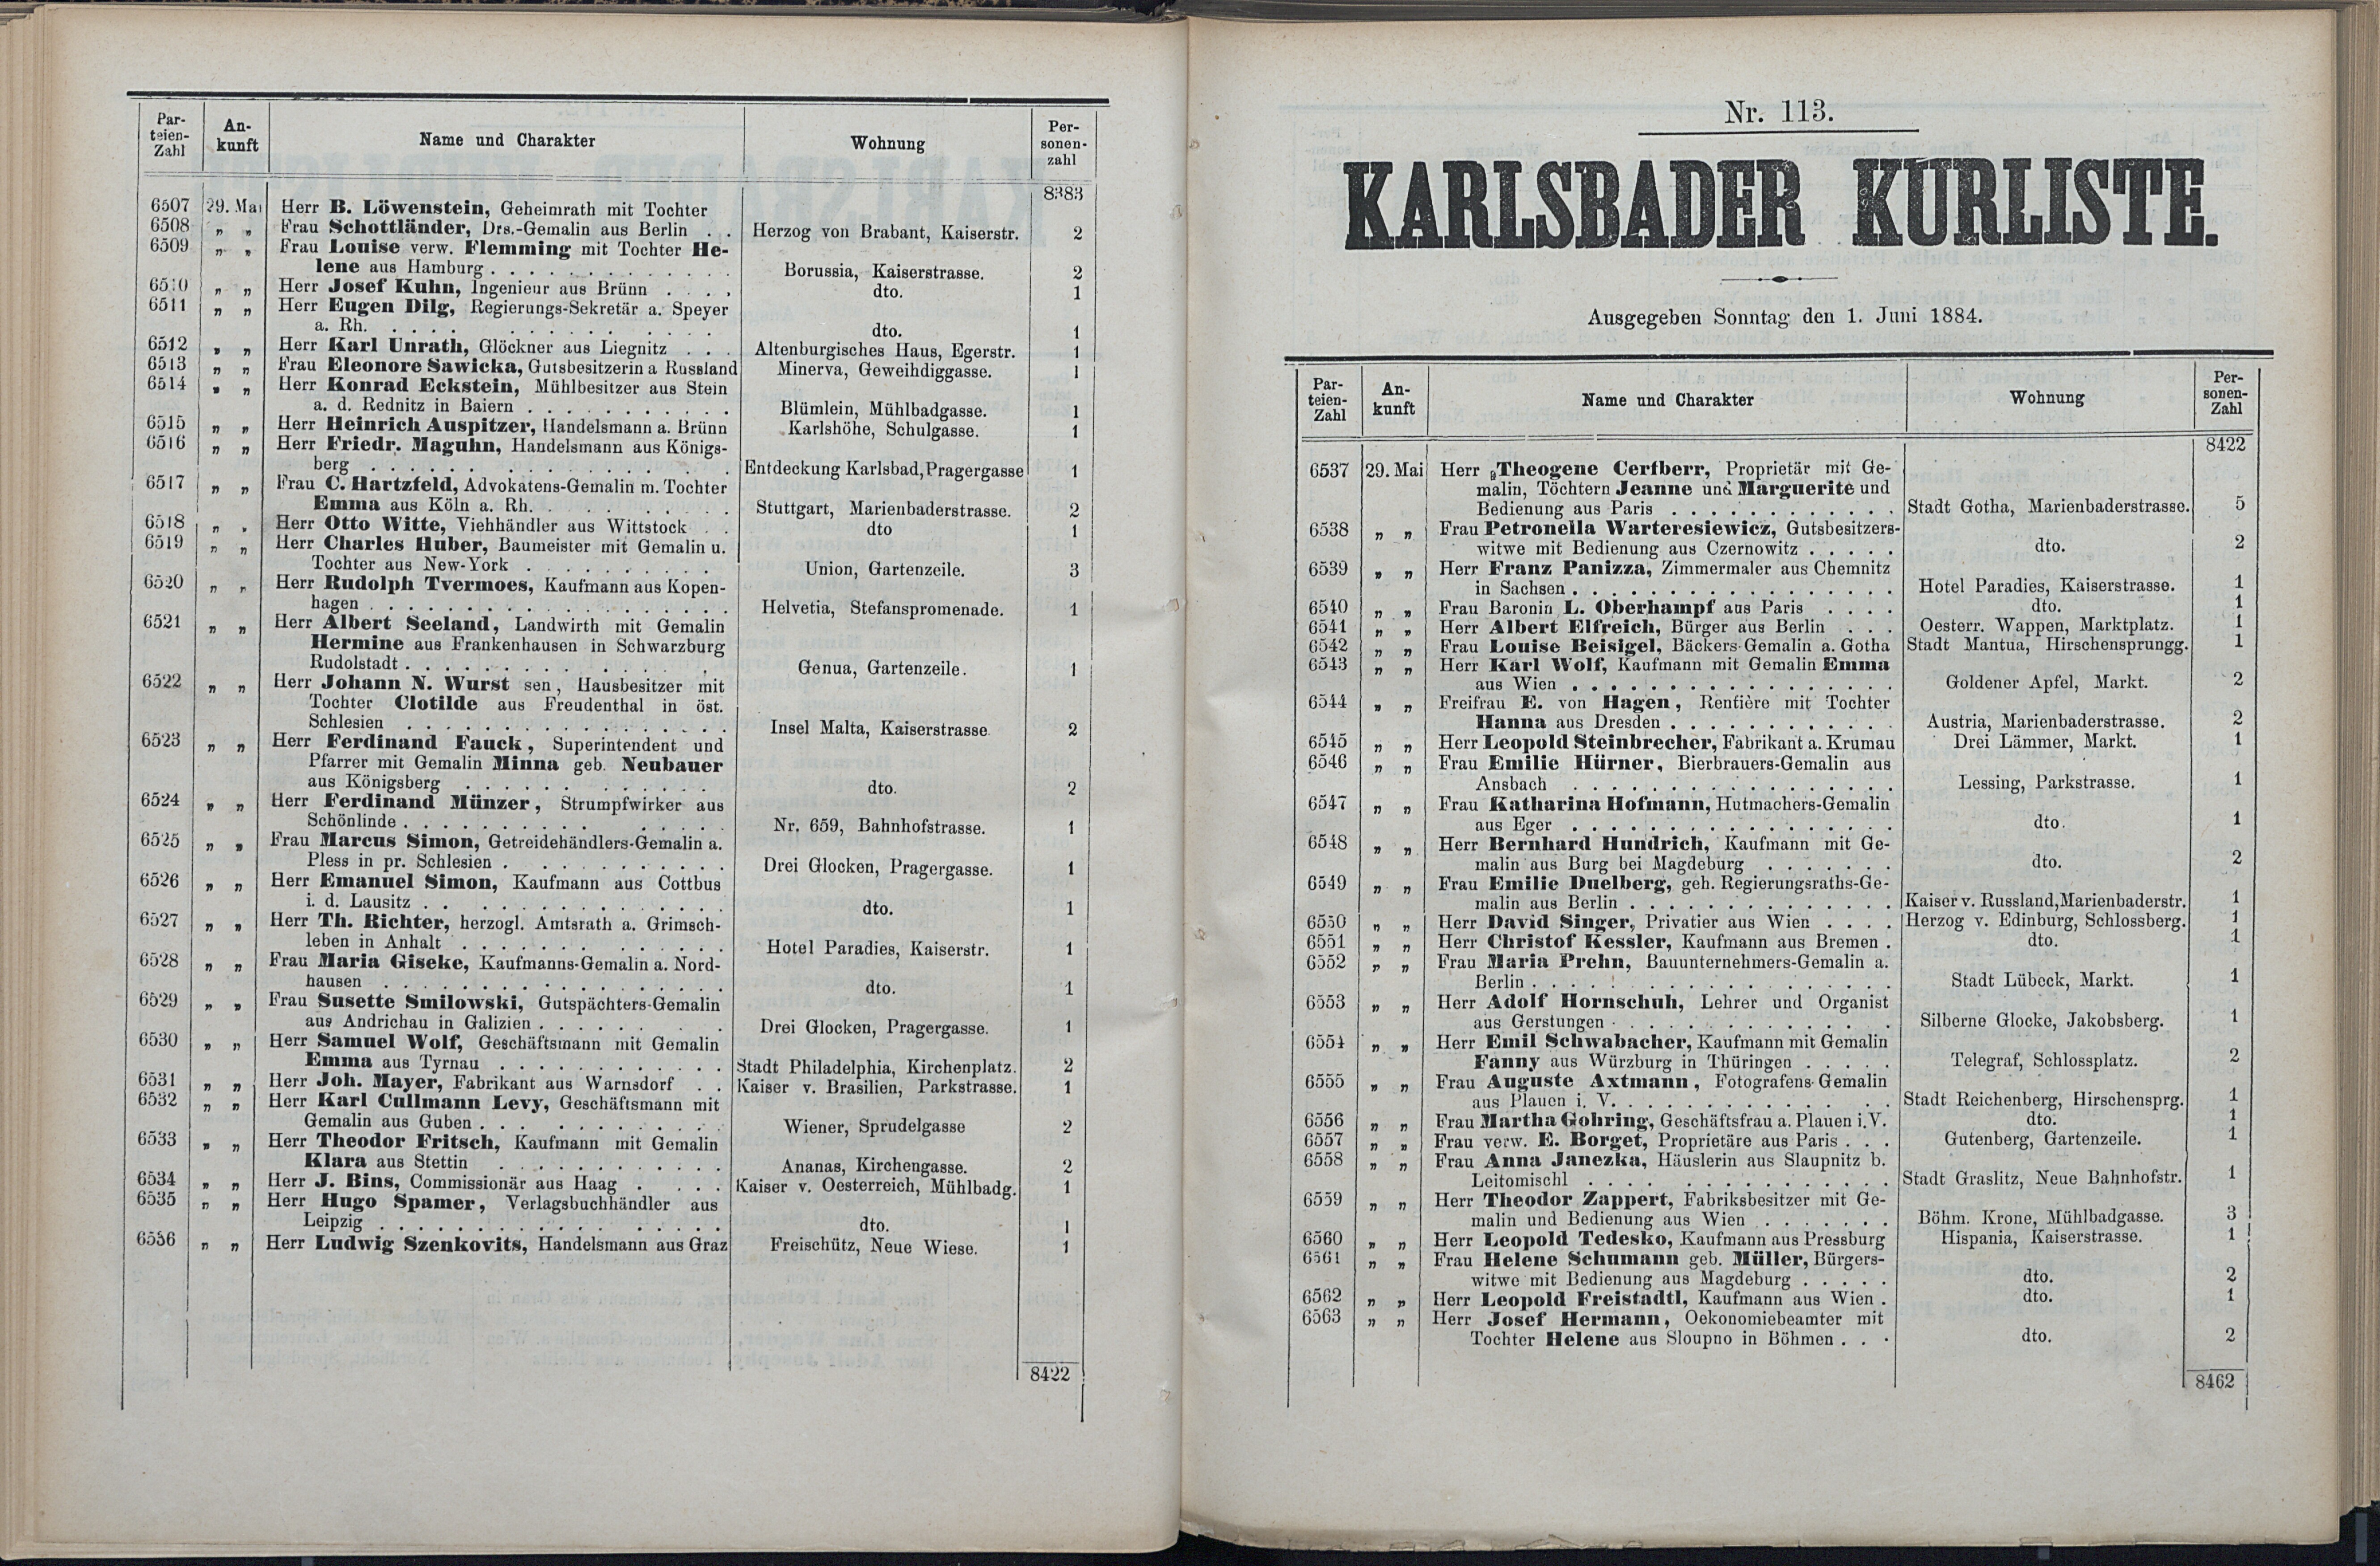 130. soap-kv_knihovna_karlsbader-kurliste-1884_1310